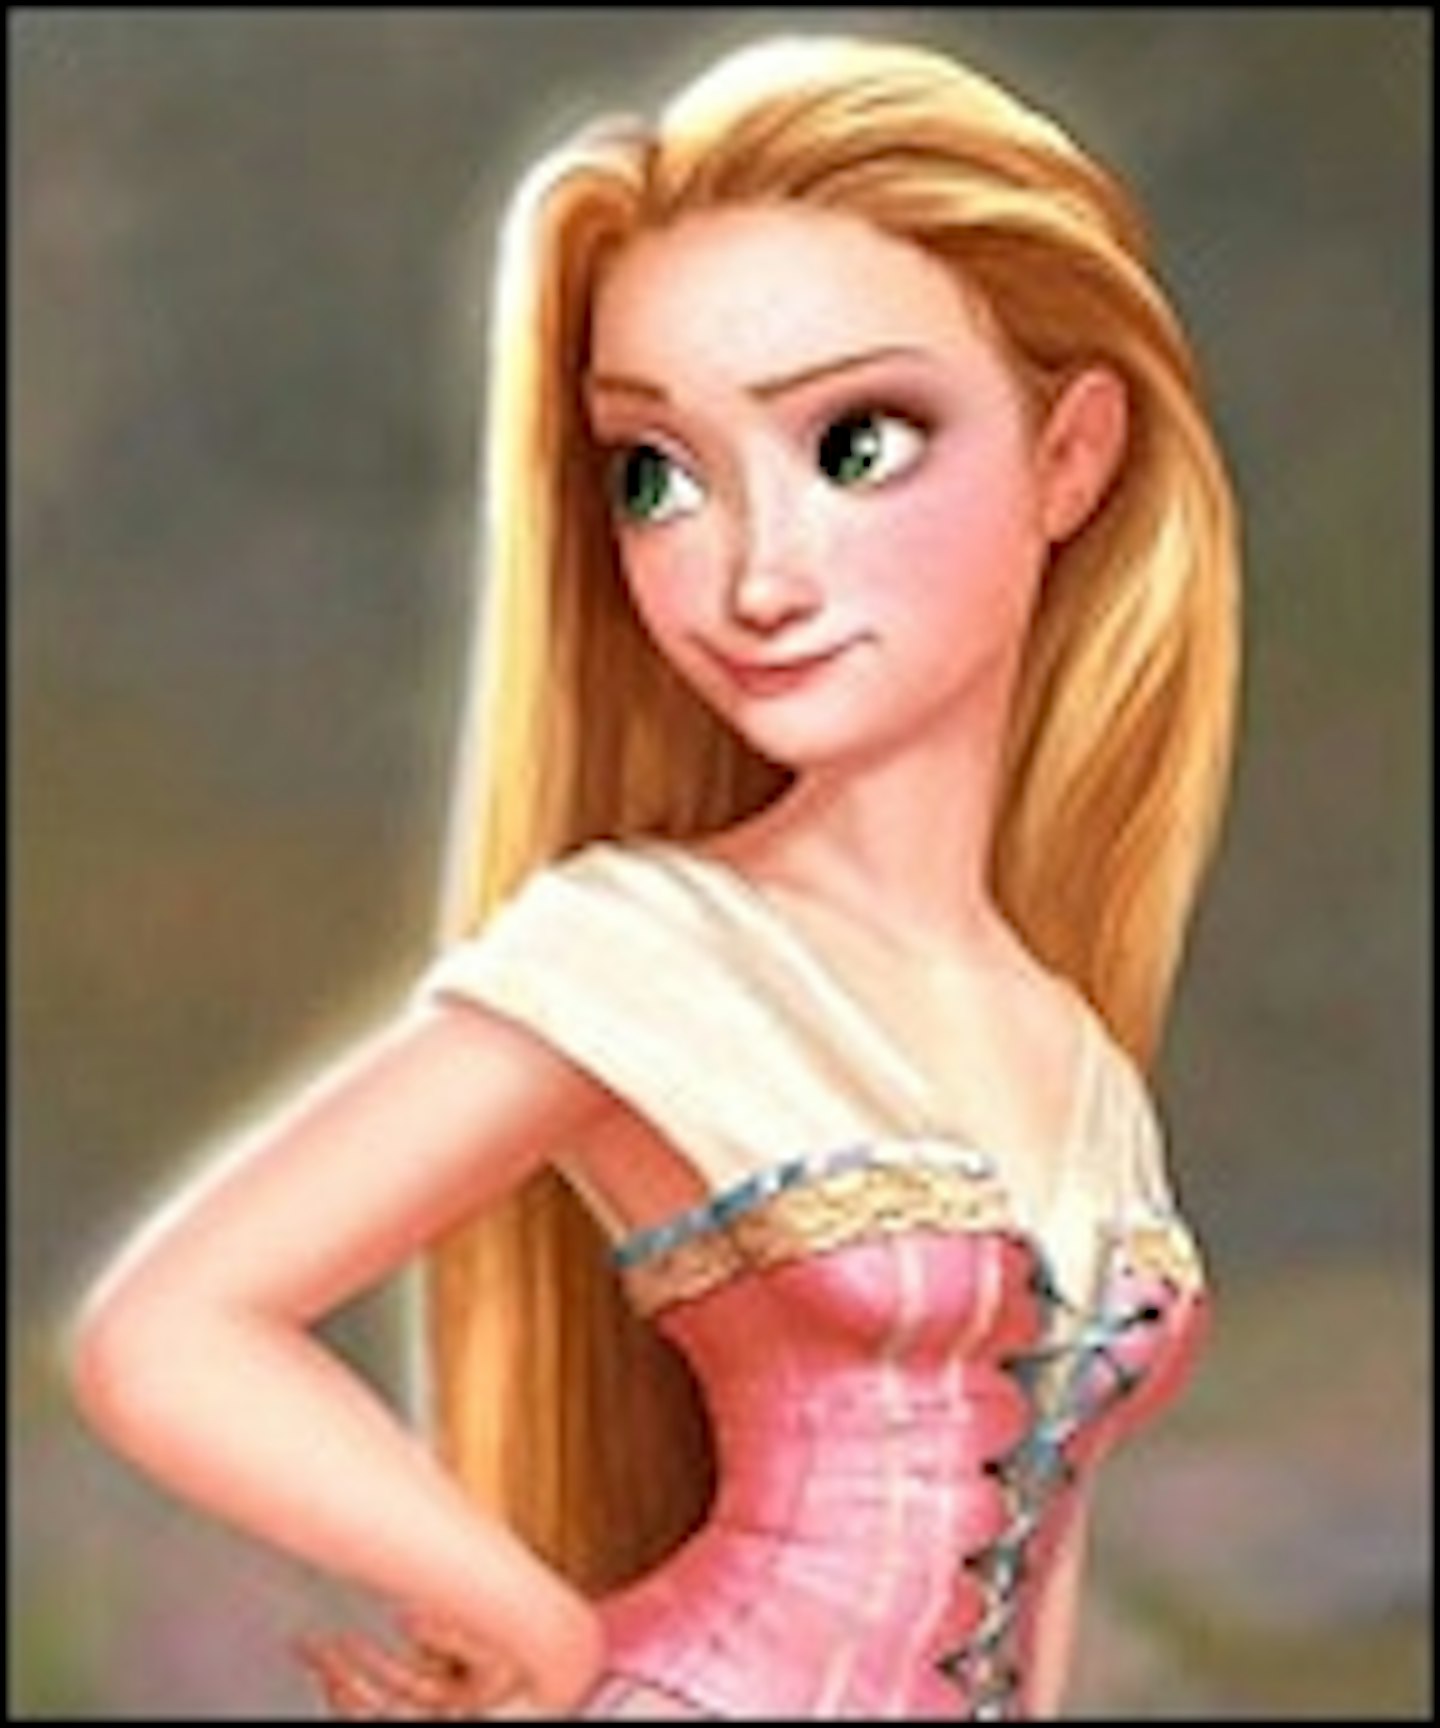 disney princess rapunzel face